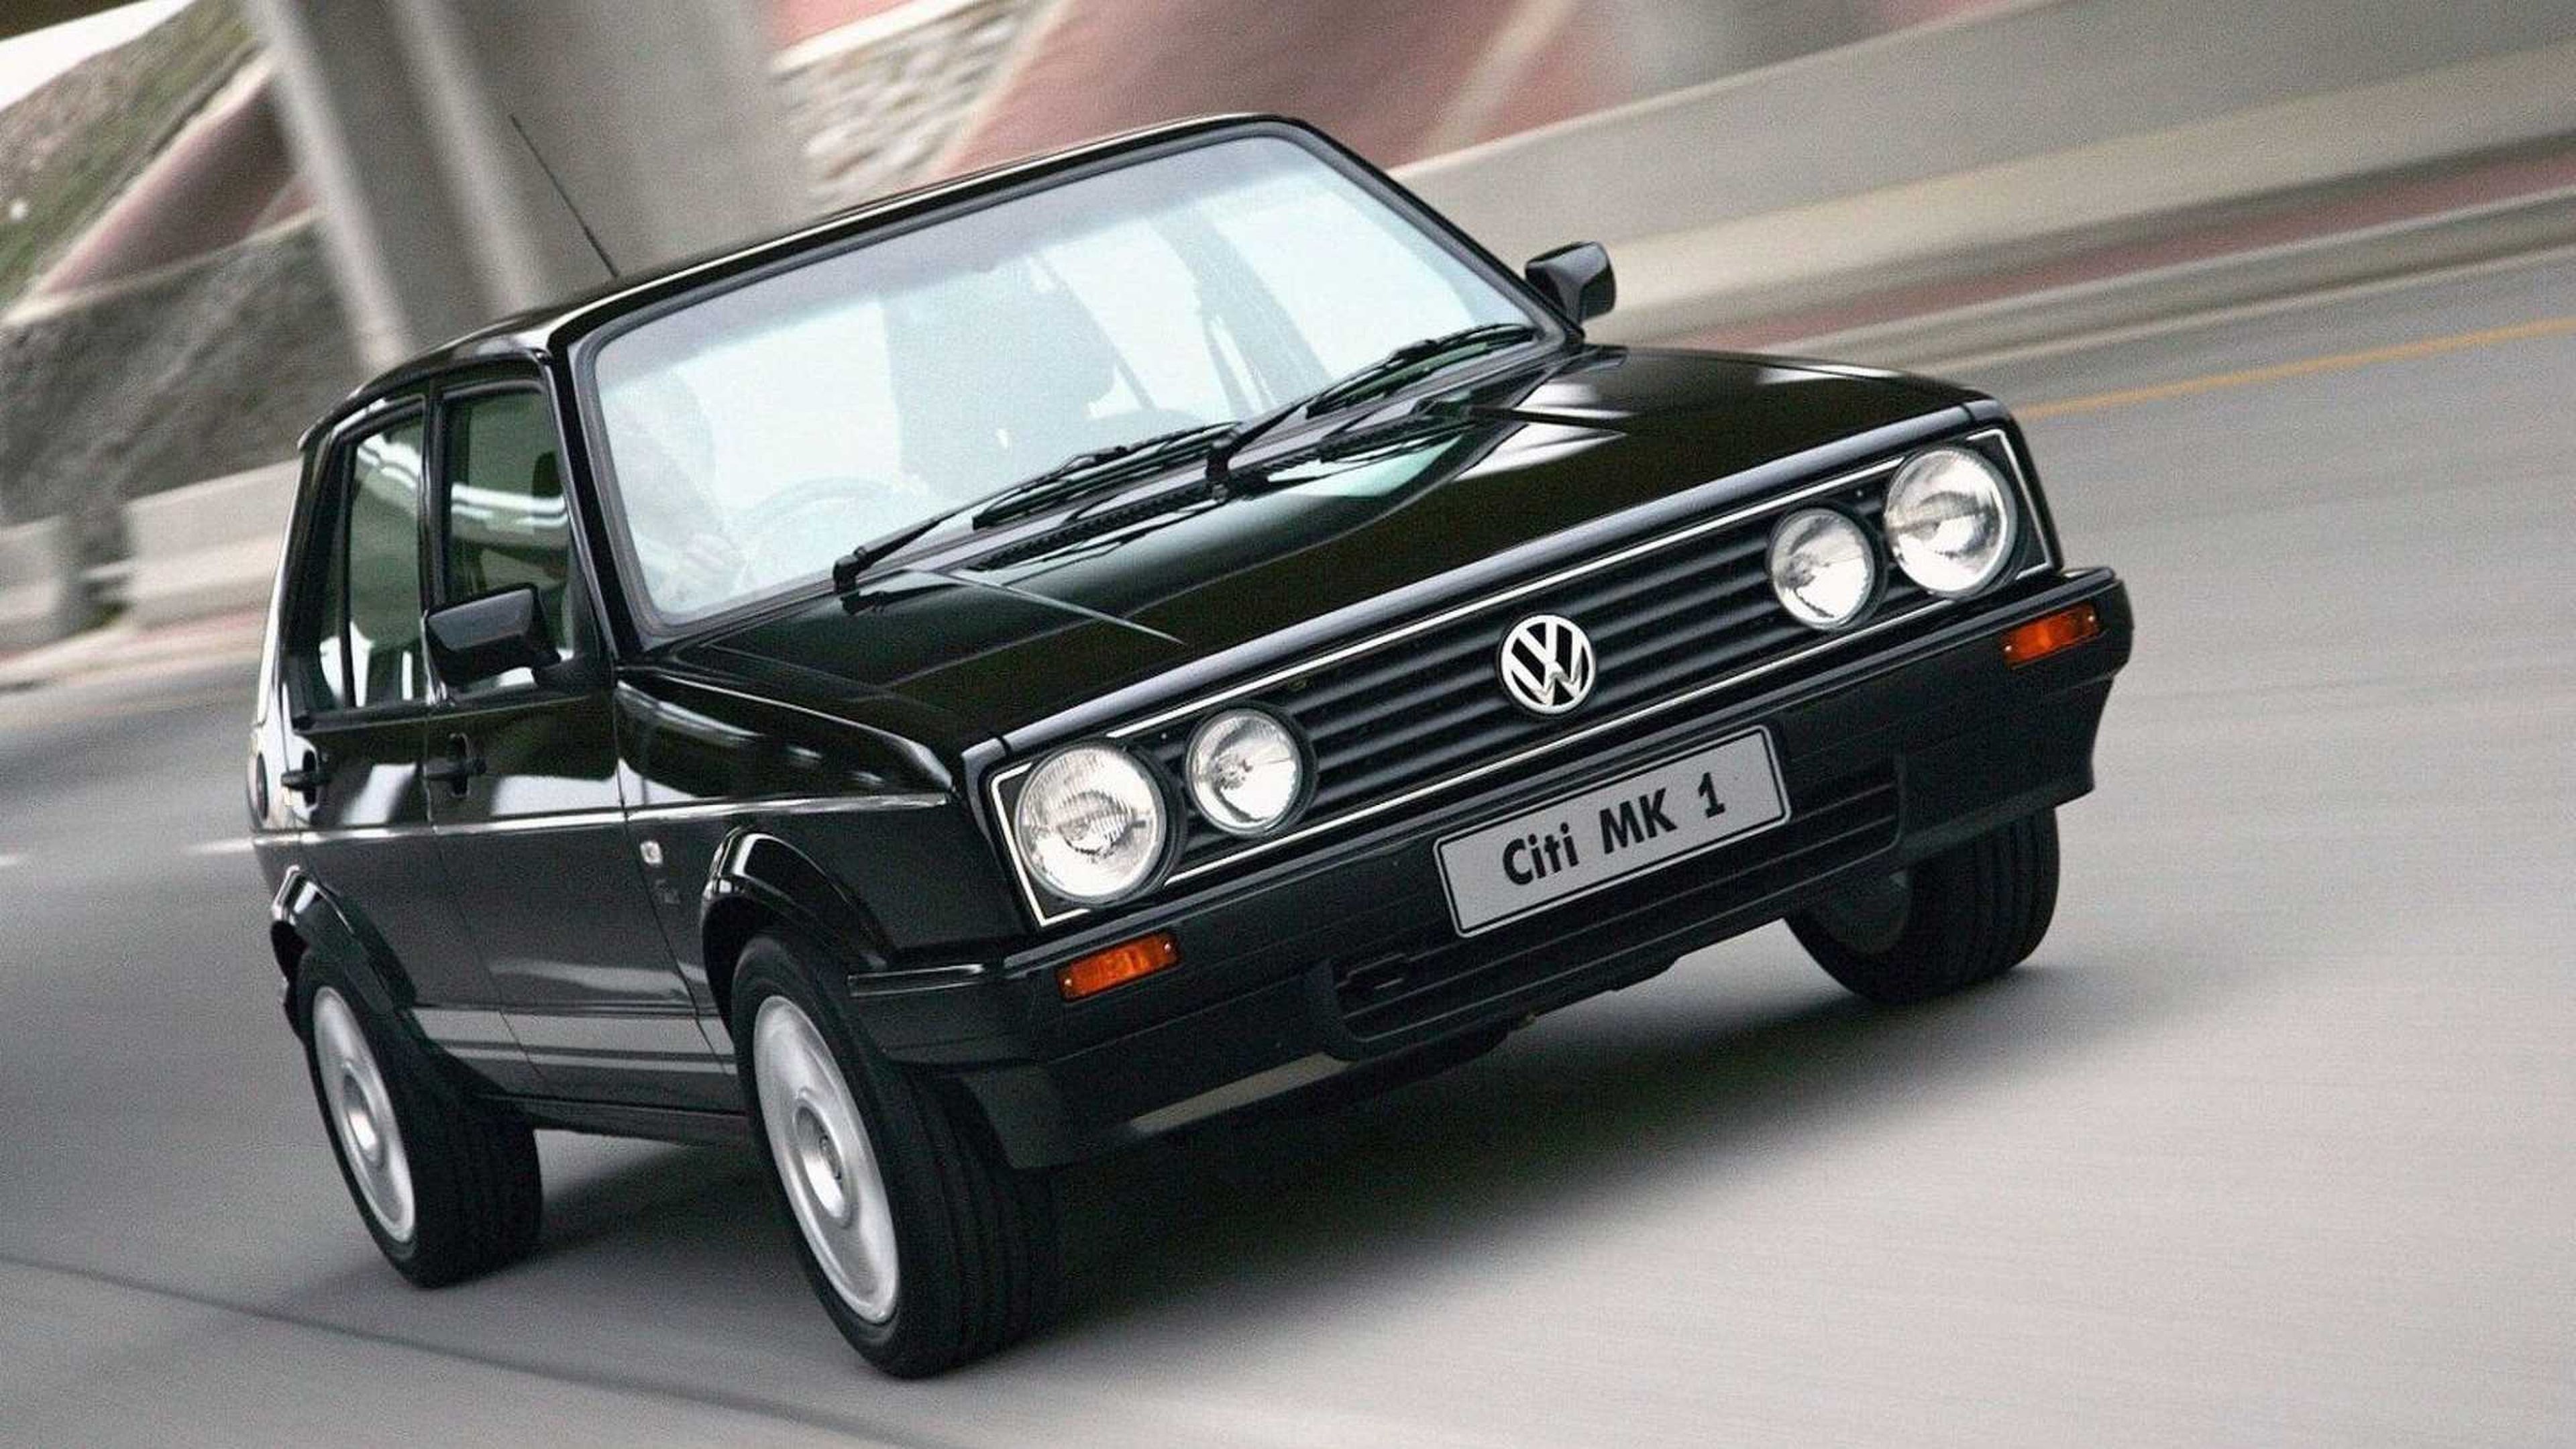 Volkswagen Golf Citi Limited Edition